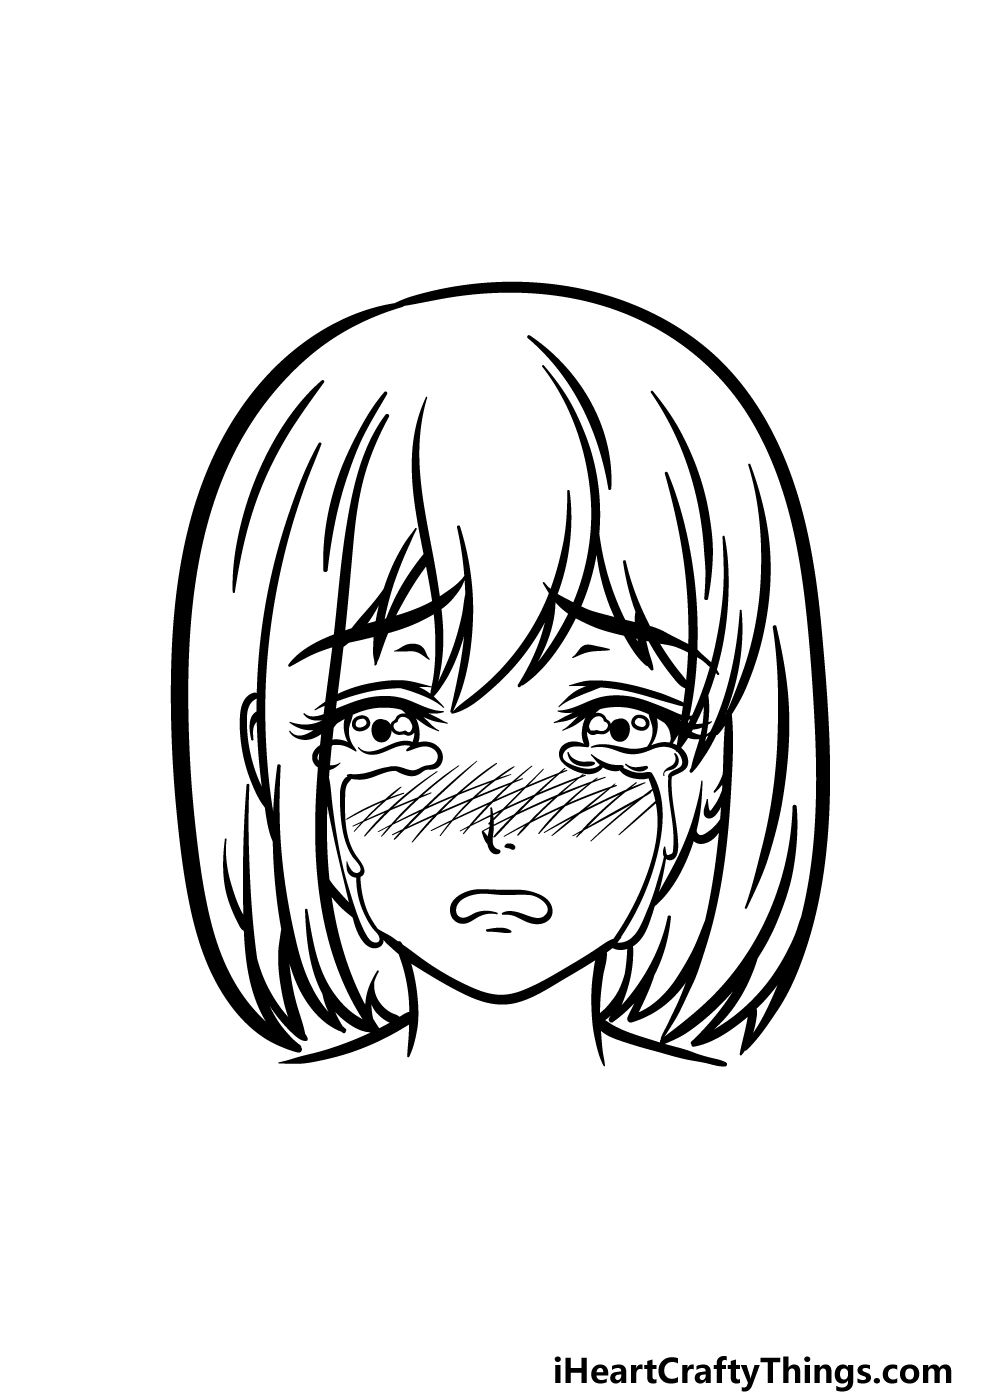 Sad Anime Drawing - How To Draw A Sad Anime Step By Step